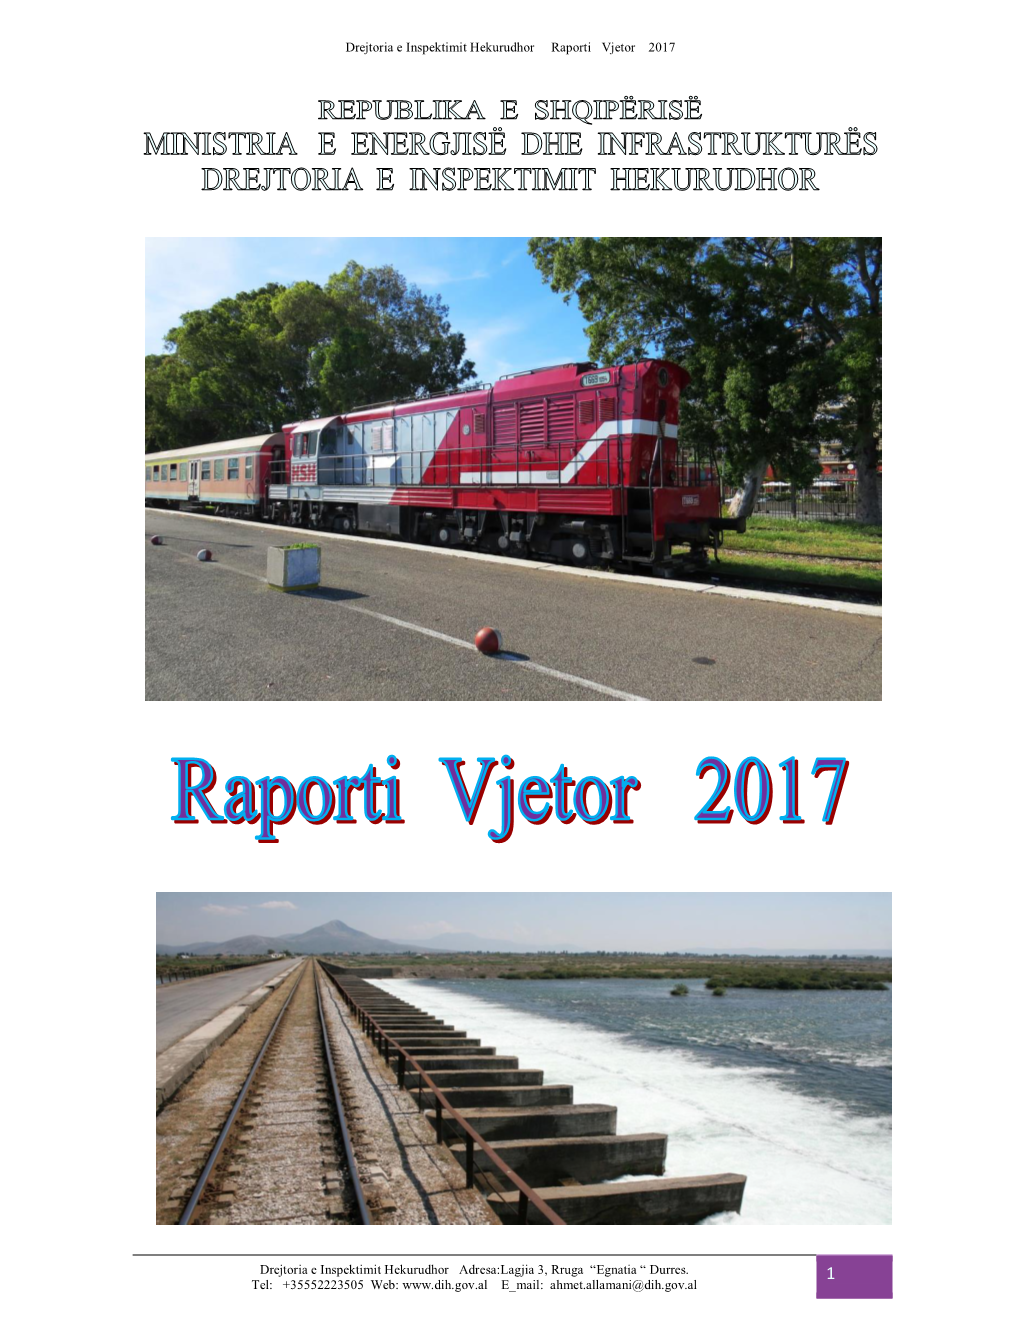 DIH-Raporti Vjetor 2017.Pdf